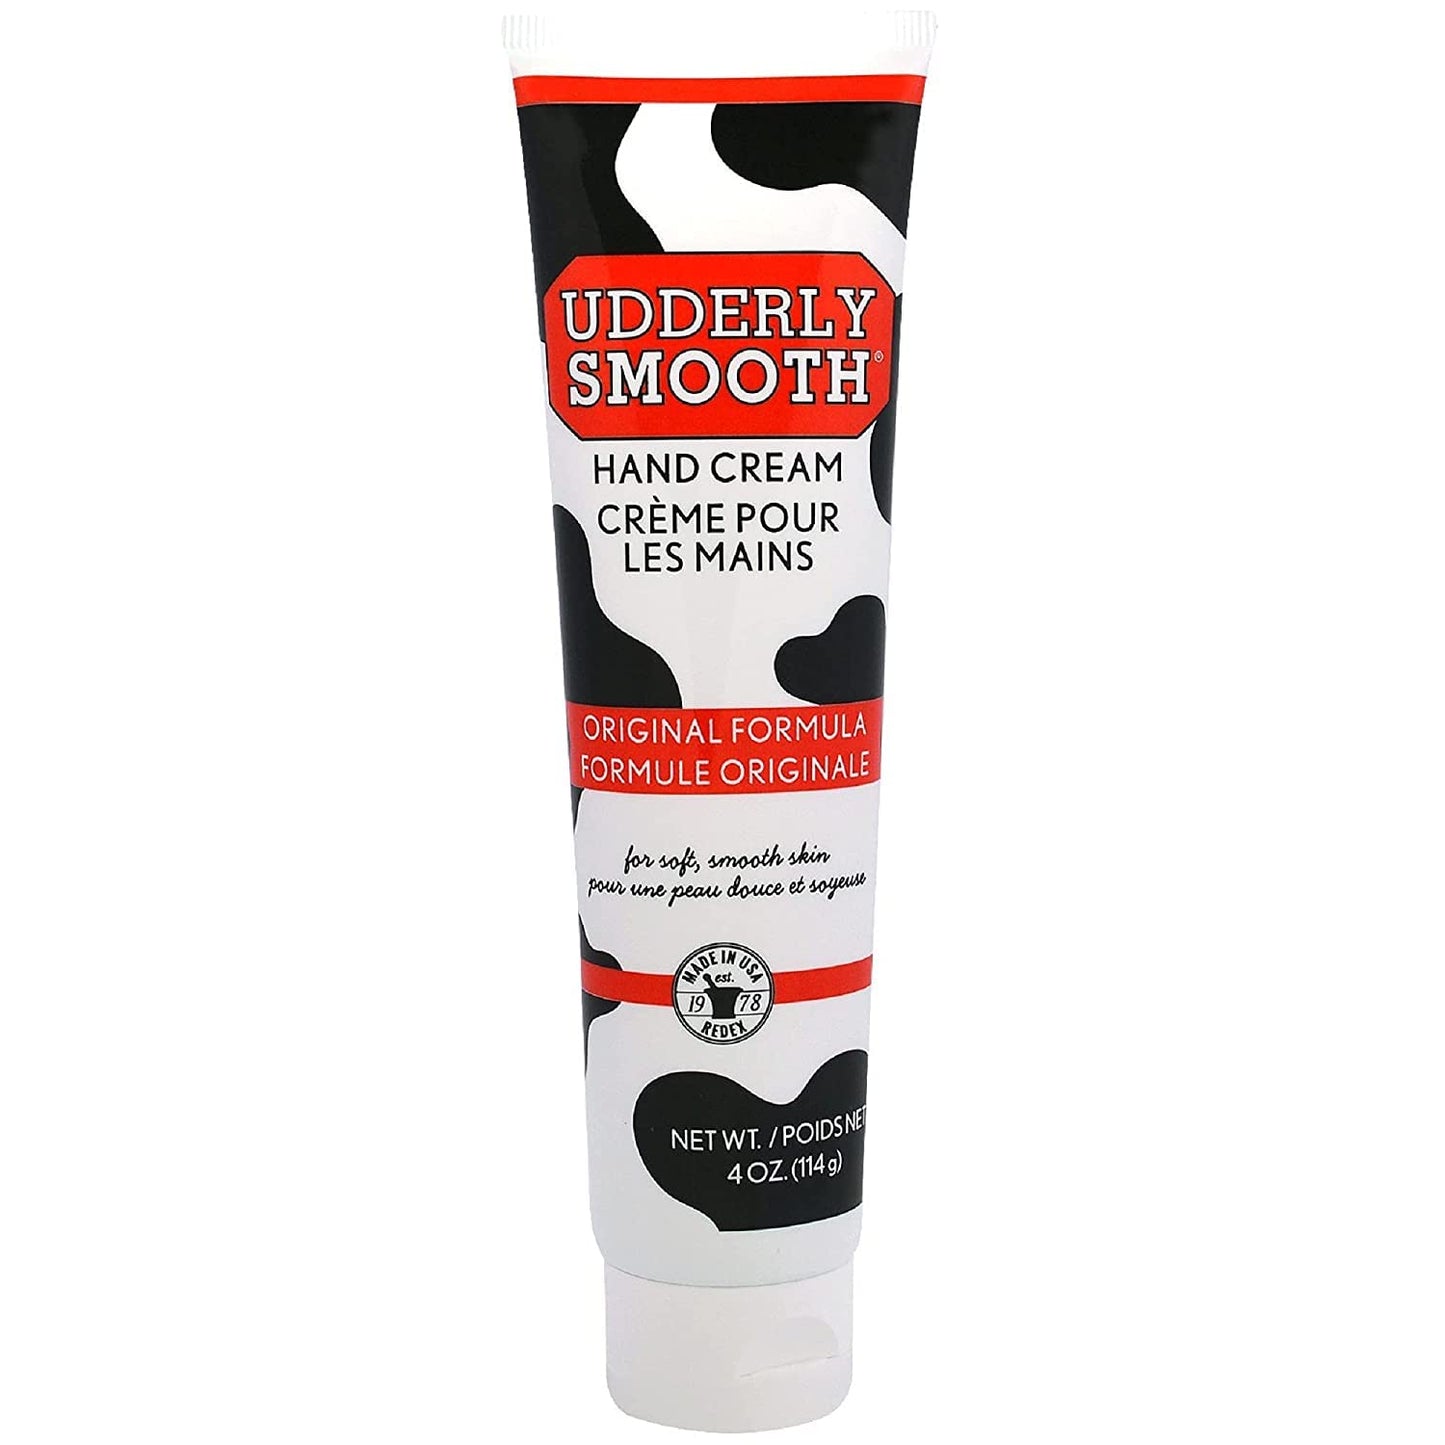 Udderly Smooth Hand Cream 4oz (Pack of 6)